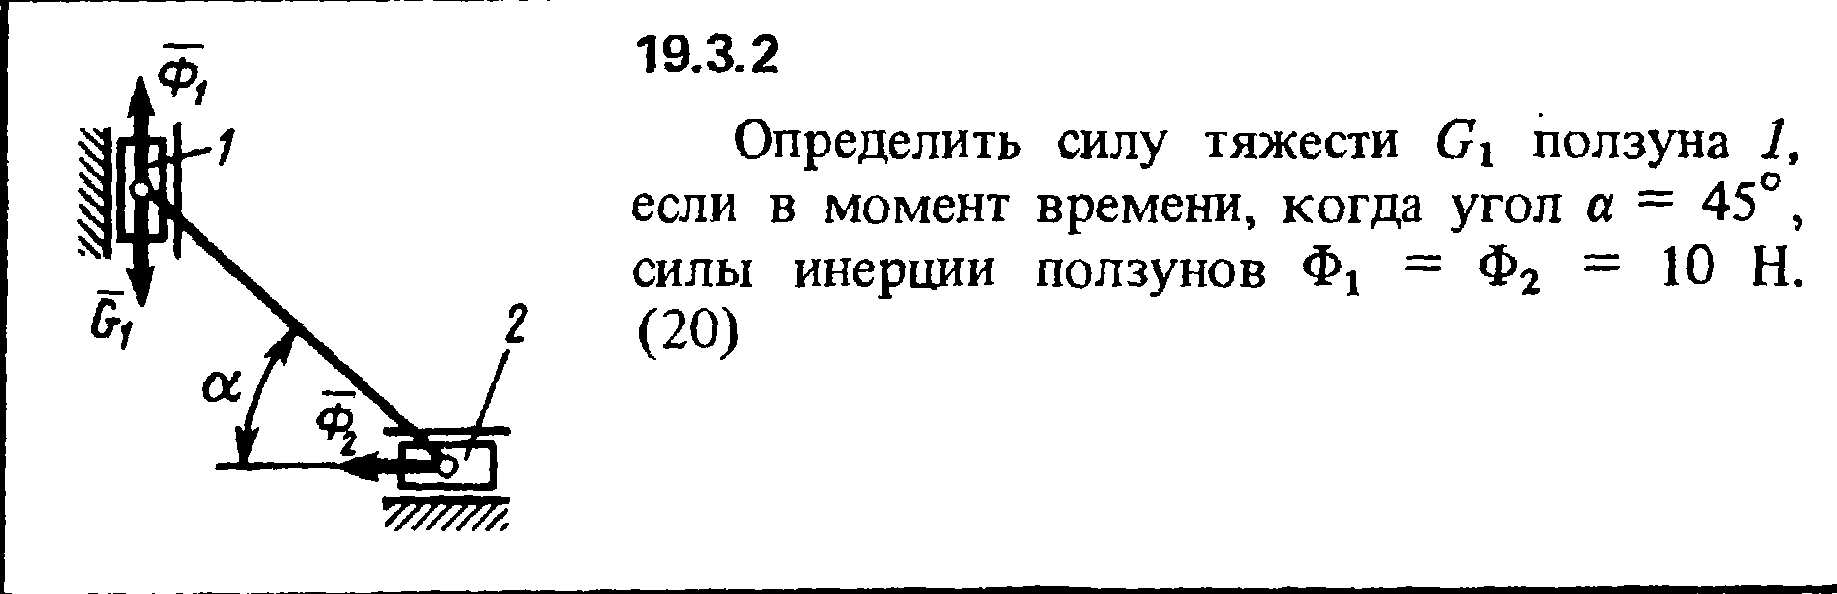 Решение 19.3.2 из сборника (решебника) Кепе О.Е. 1989